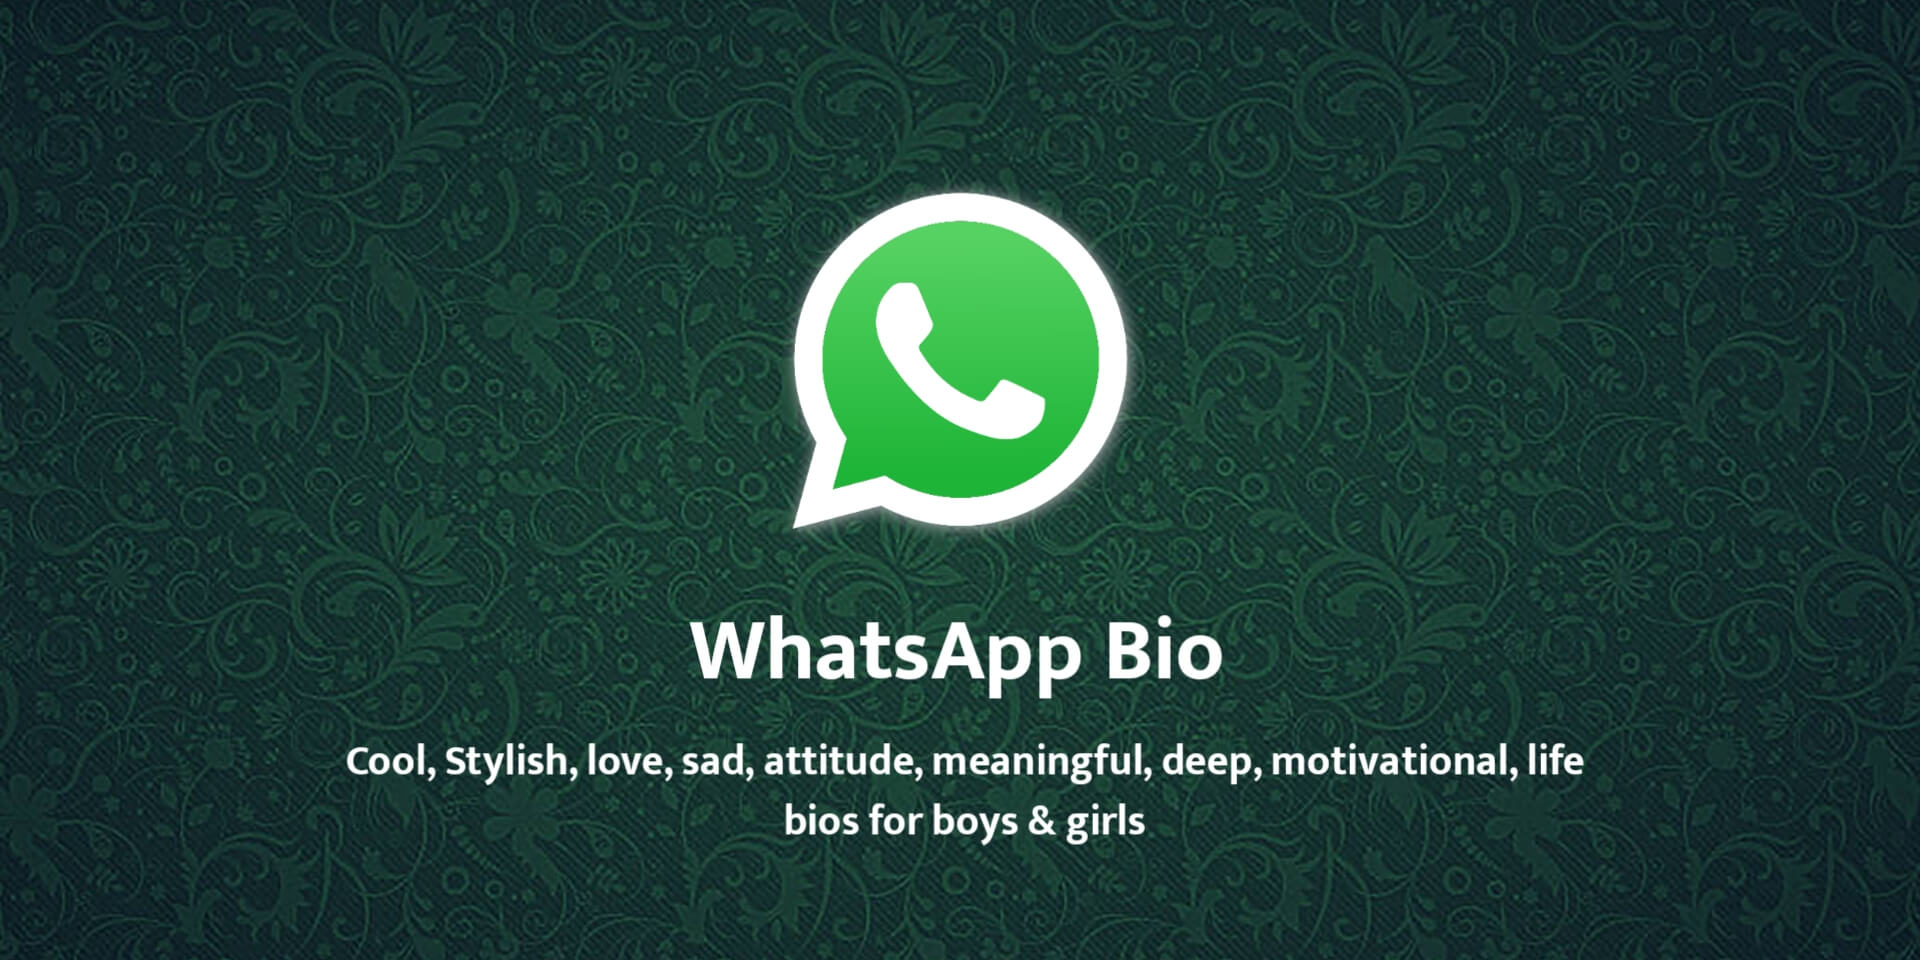 500+ BEST WhatsApp Bio Ideas for Boys & Girls in English